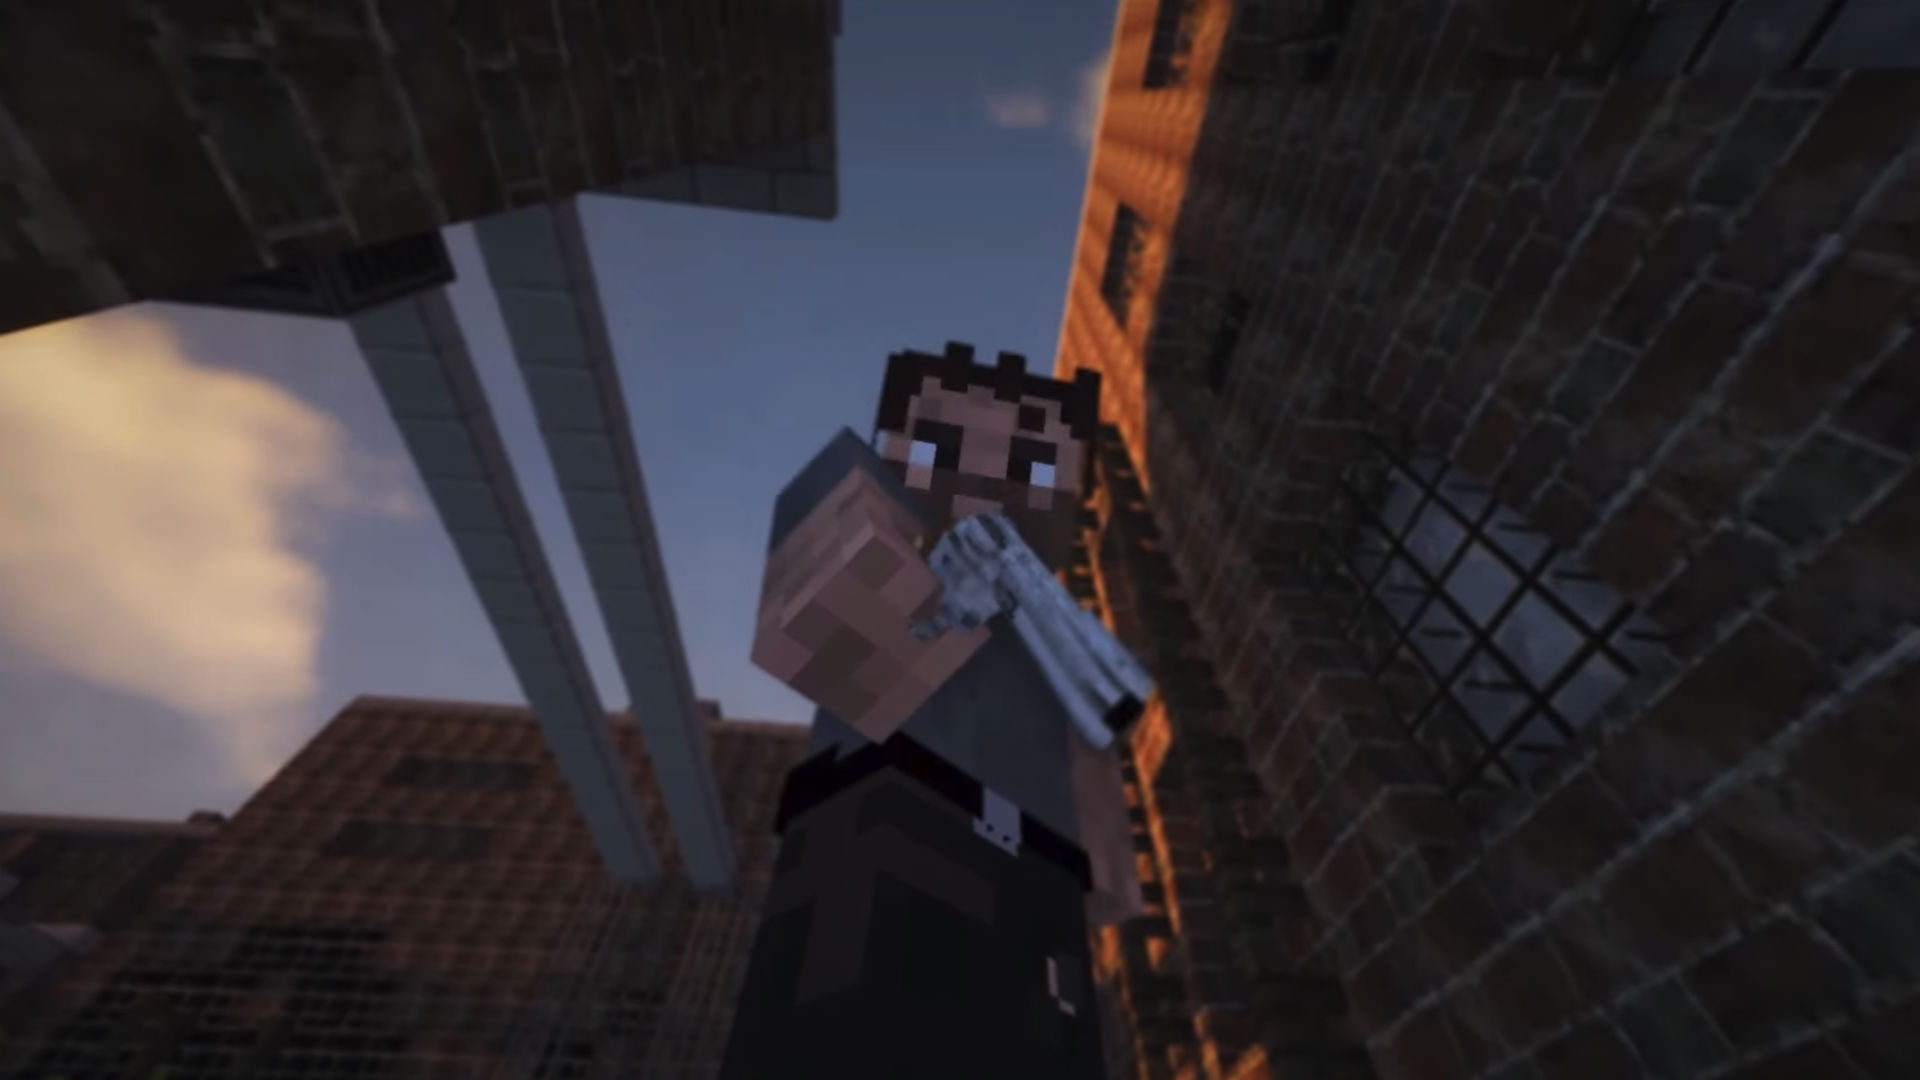 Best Minecraft servers: a man holding a gun in The Mining Dead.